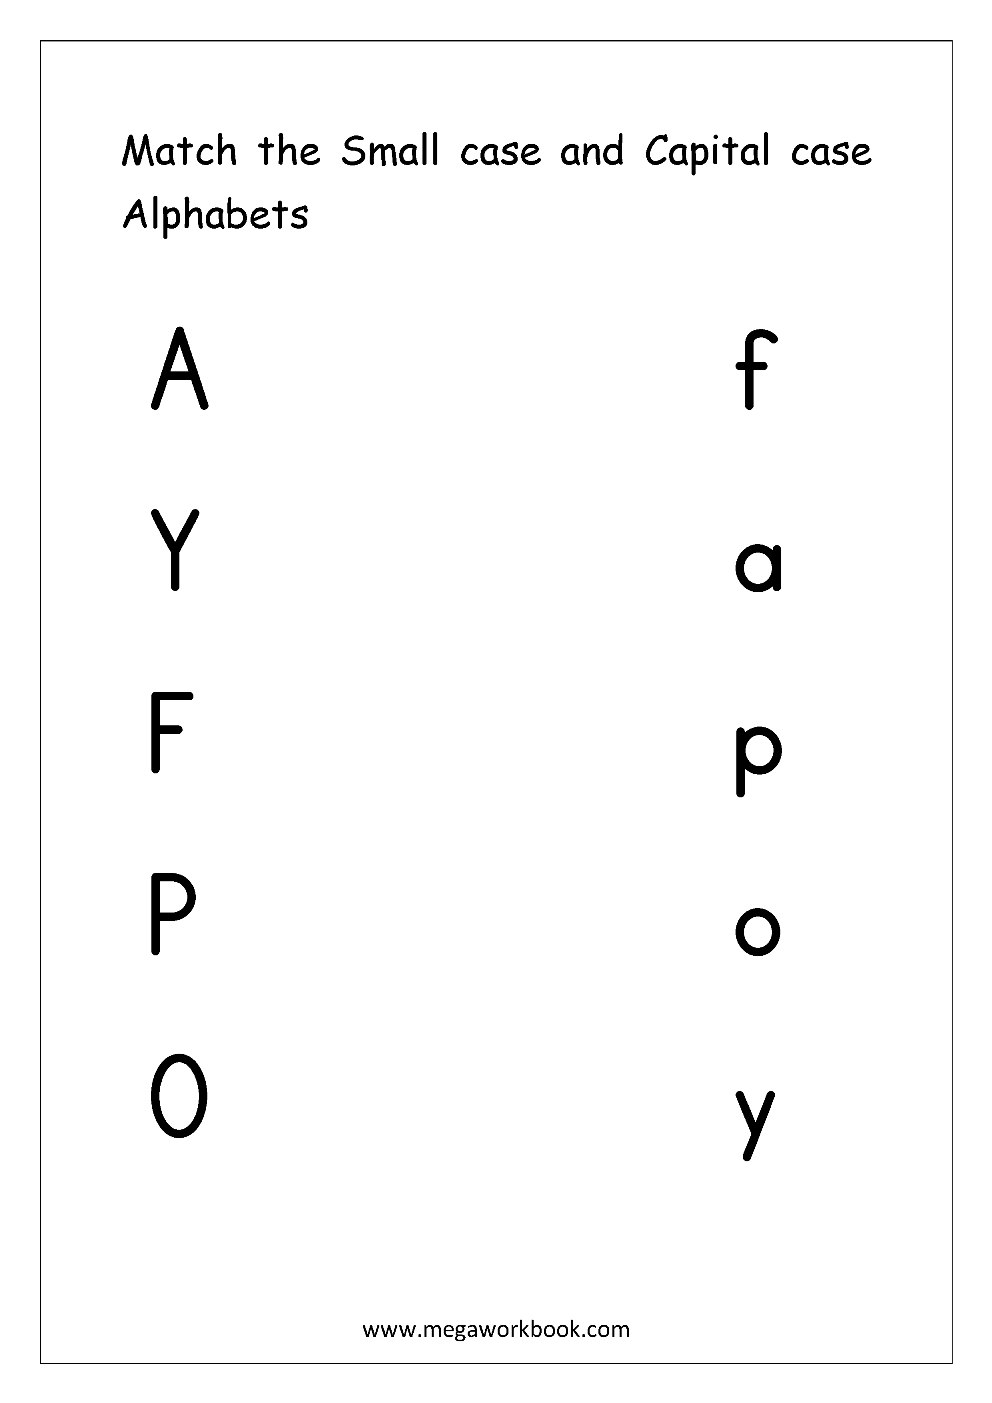 Free English Worksheets - Alphabet Matching - Megaworkbook inside Alphabet Worksheets English